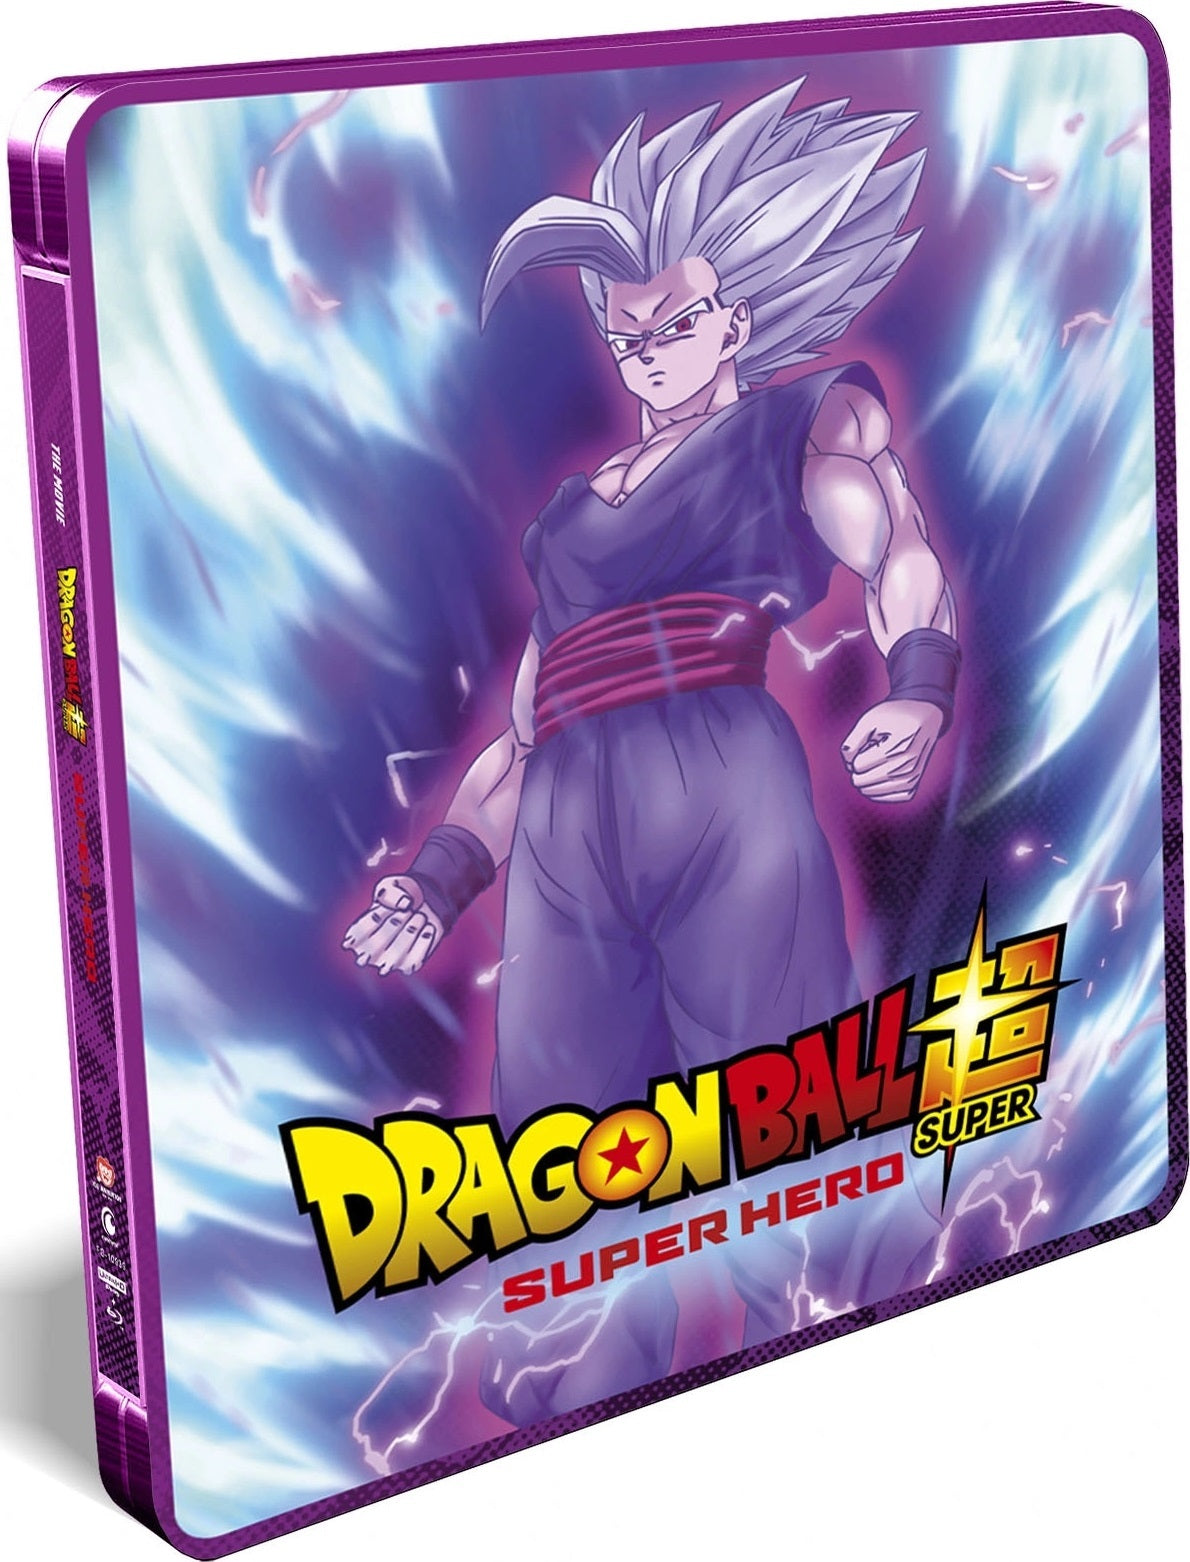 Dragon Ball Super: Super Hero 4K Release Date Set